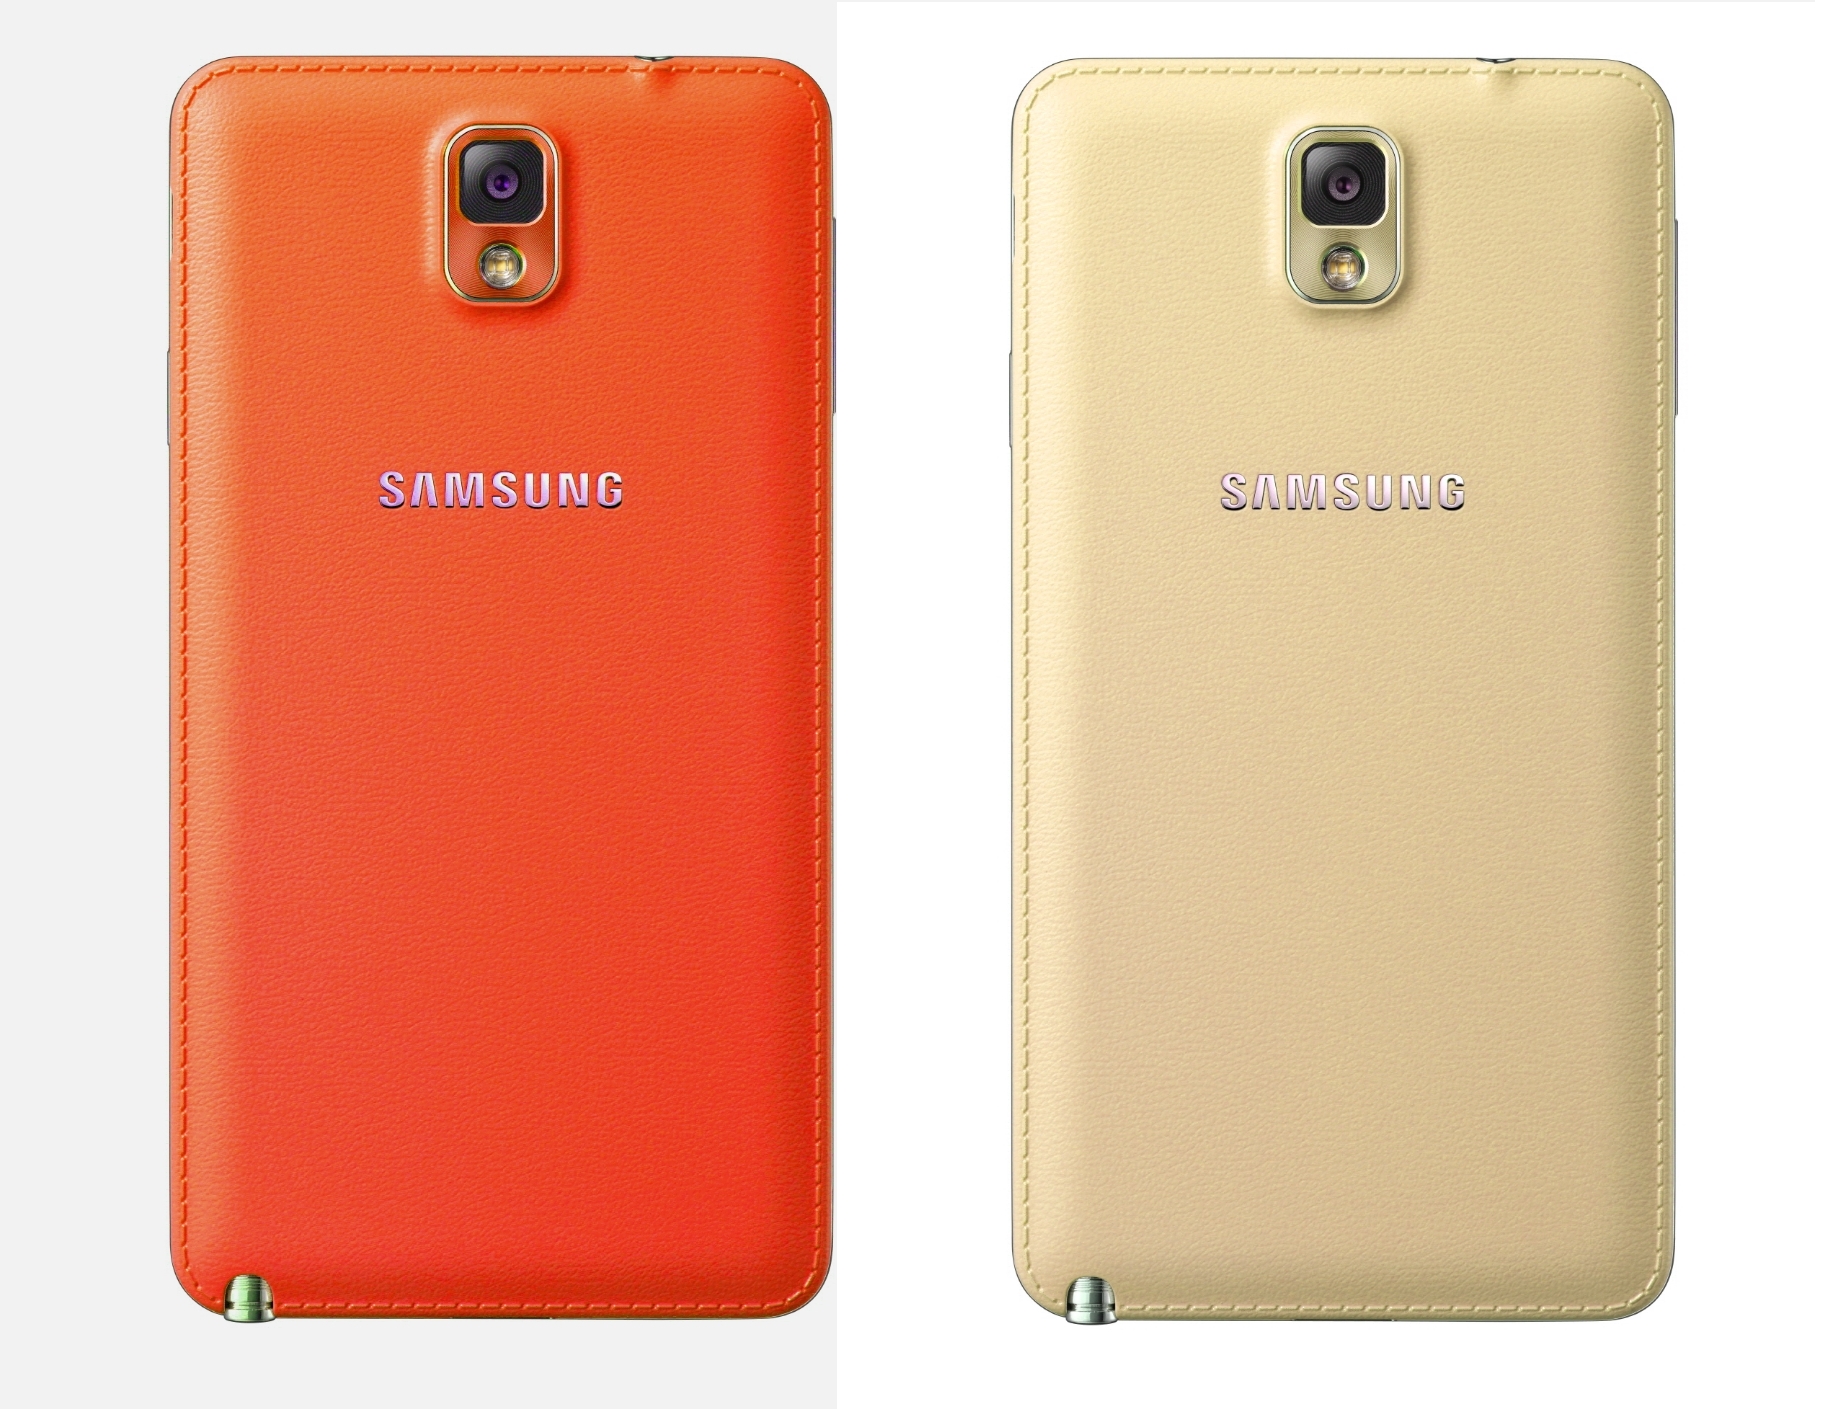 Samsung-Galaxy-Note-3-red gold render